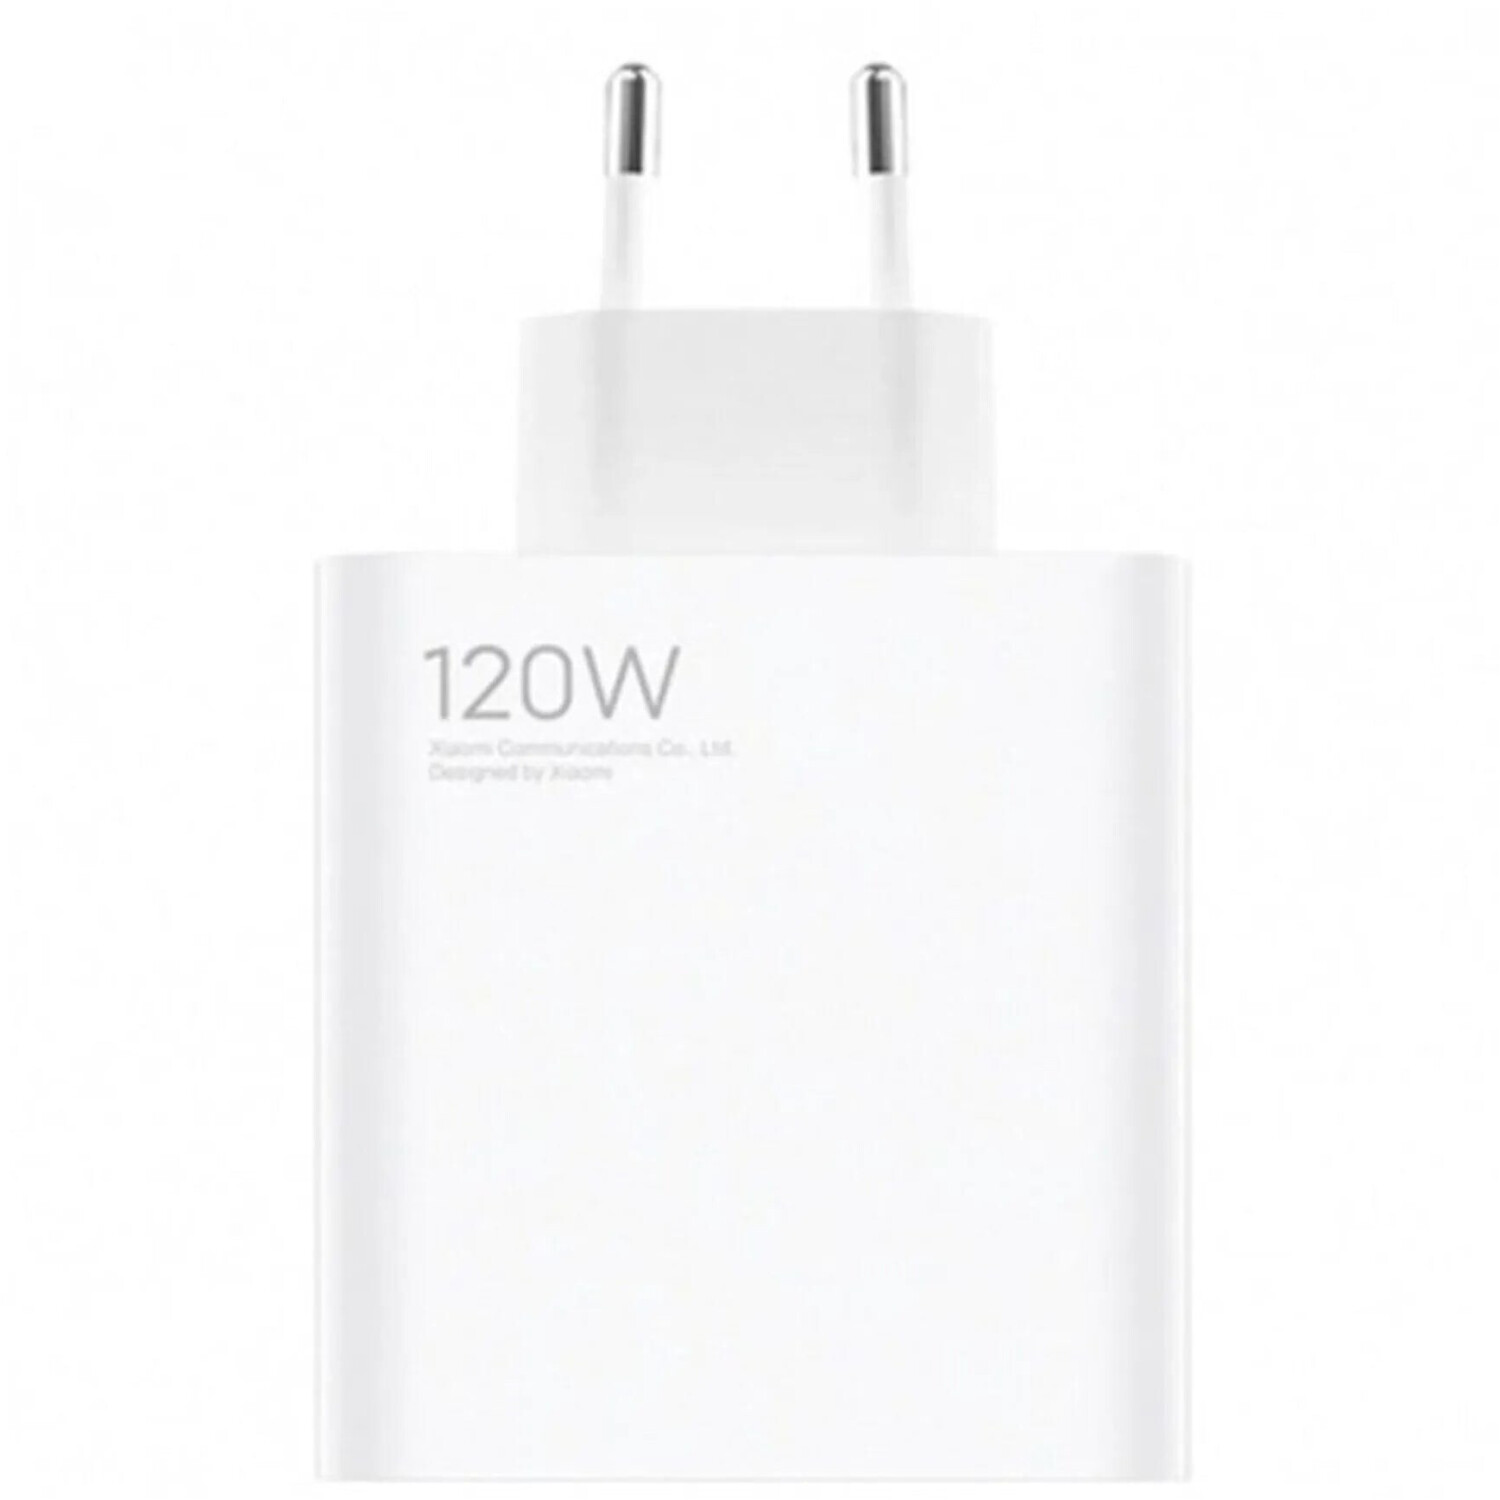 Chargeur USB 120W prise EU/US/UK Charge rapide Charge rapide QC3.0 Type C  cable adaptateur mural pour t¿¿l¿¿phone portable pour iPhone Samsung Xiaomi